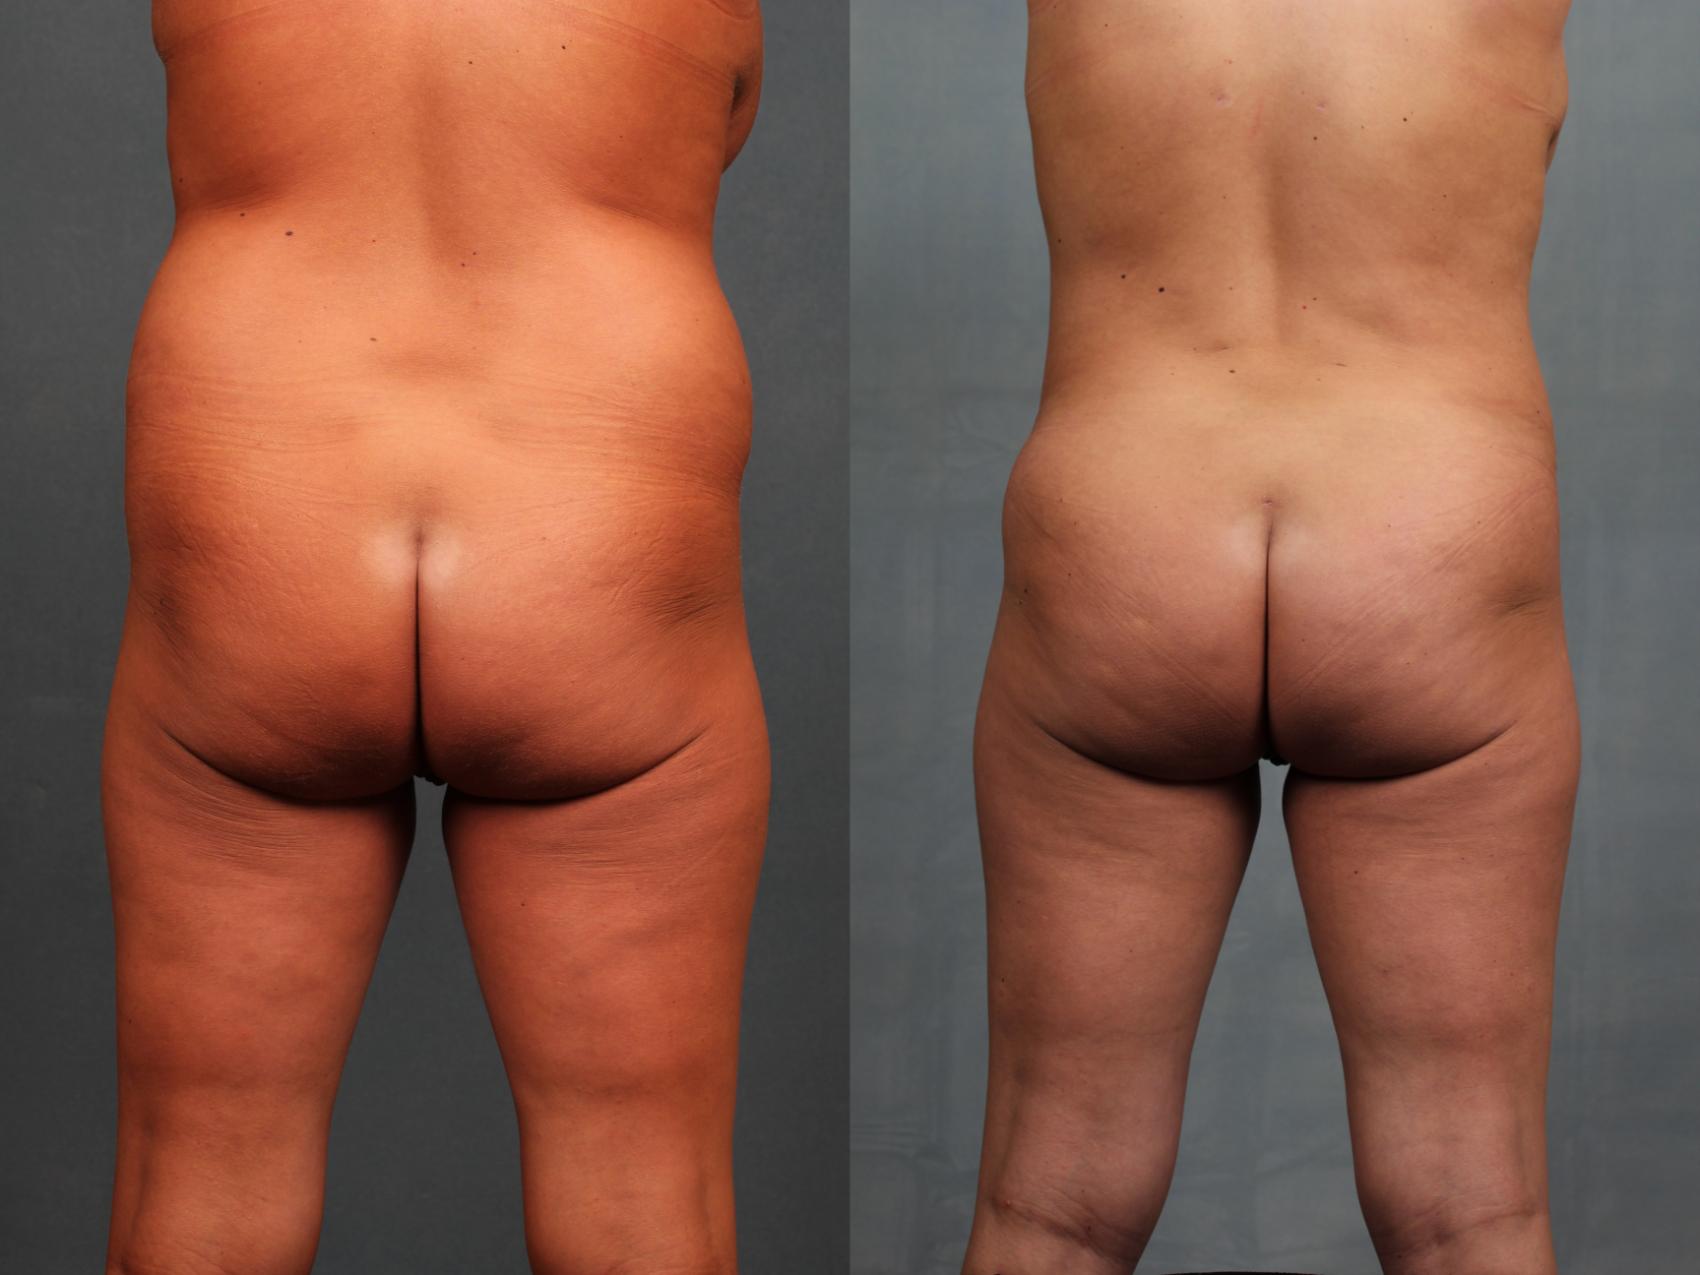 Before & After Brazilian Butt Lift Case 745 Back View in Louisville & Lexington, KY